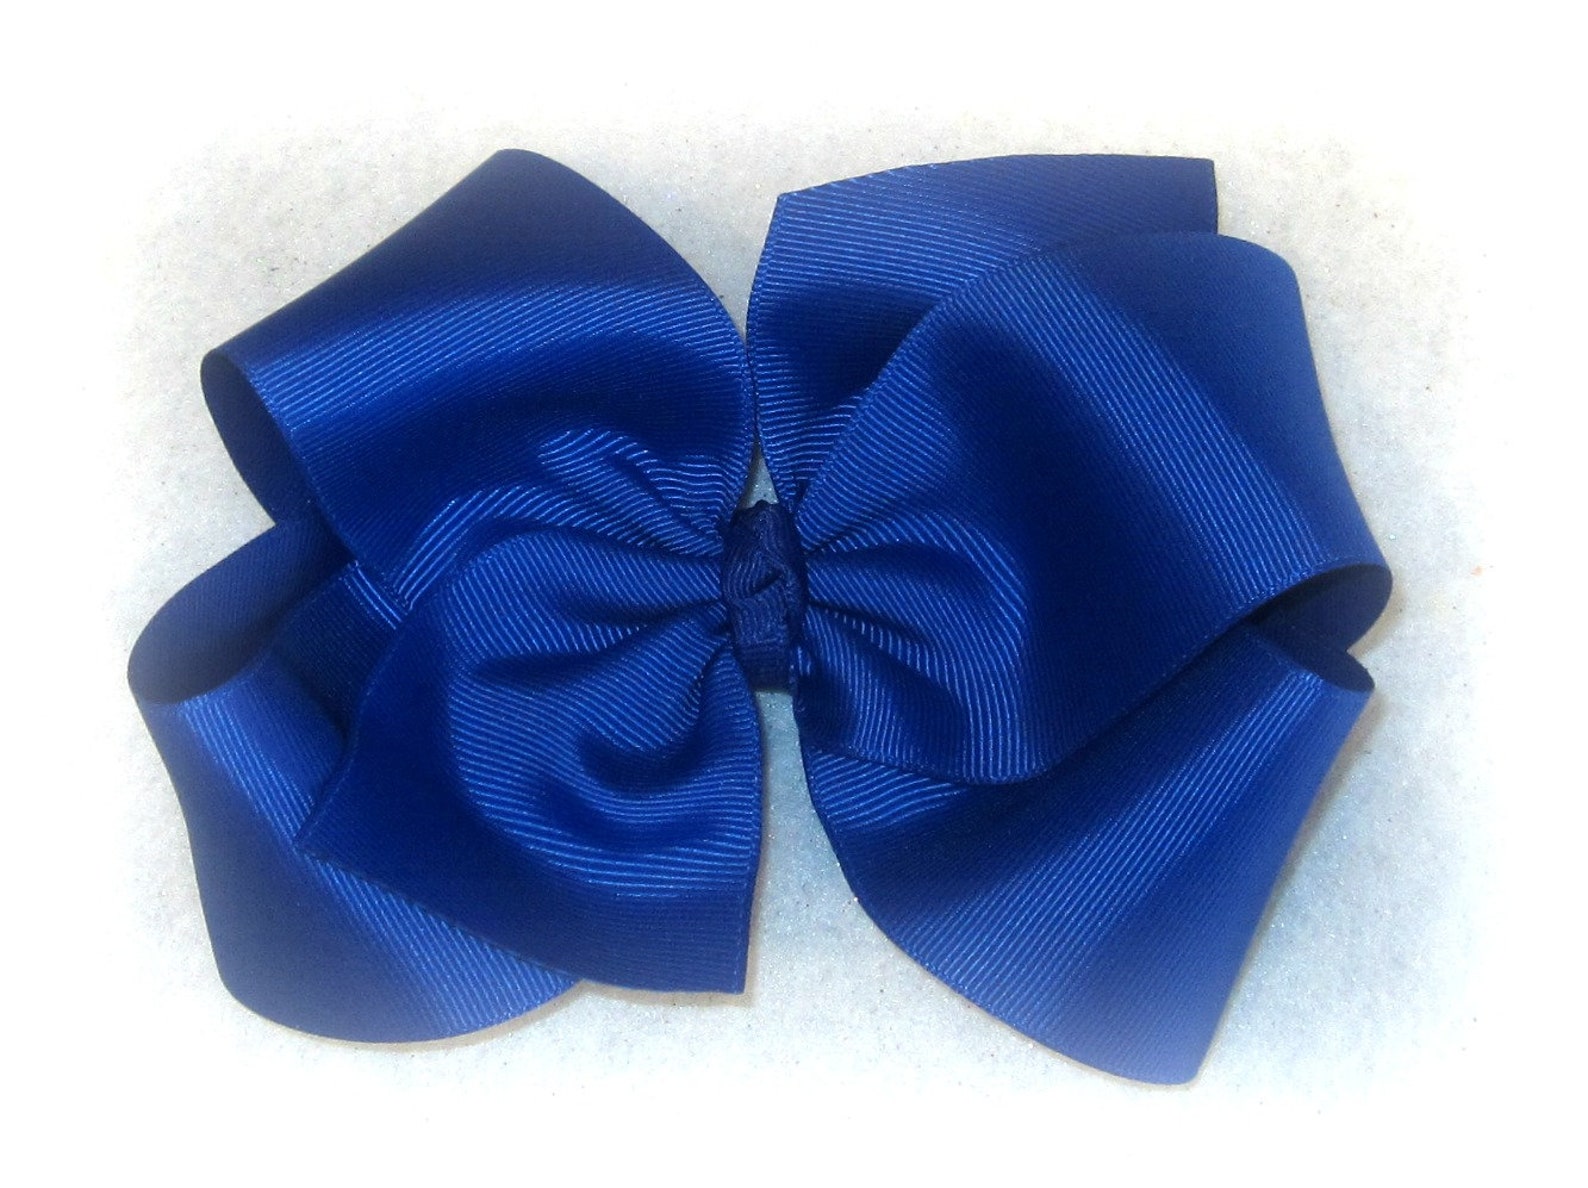 5. Big Royal Blue Hair Bow with Rhinestone Center - wide 10